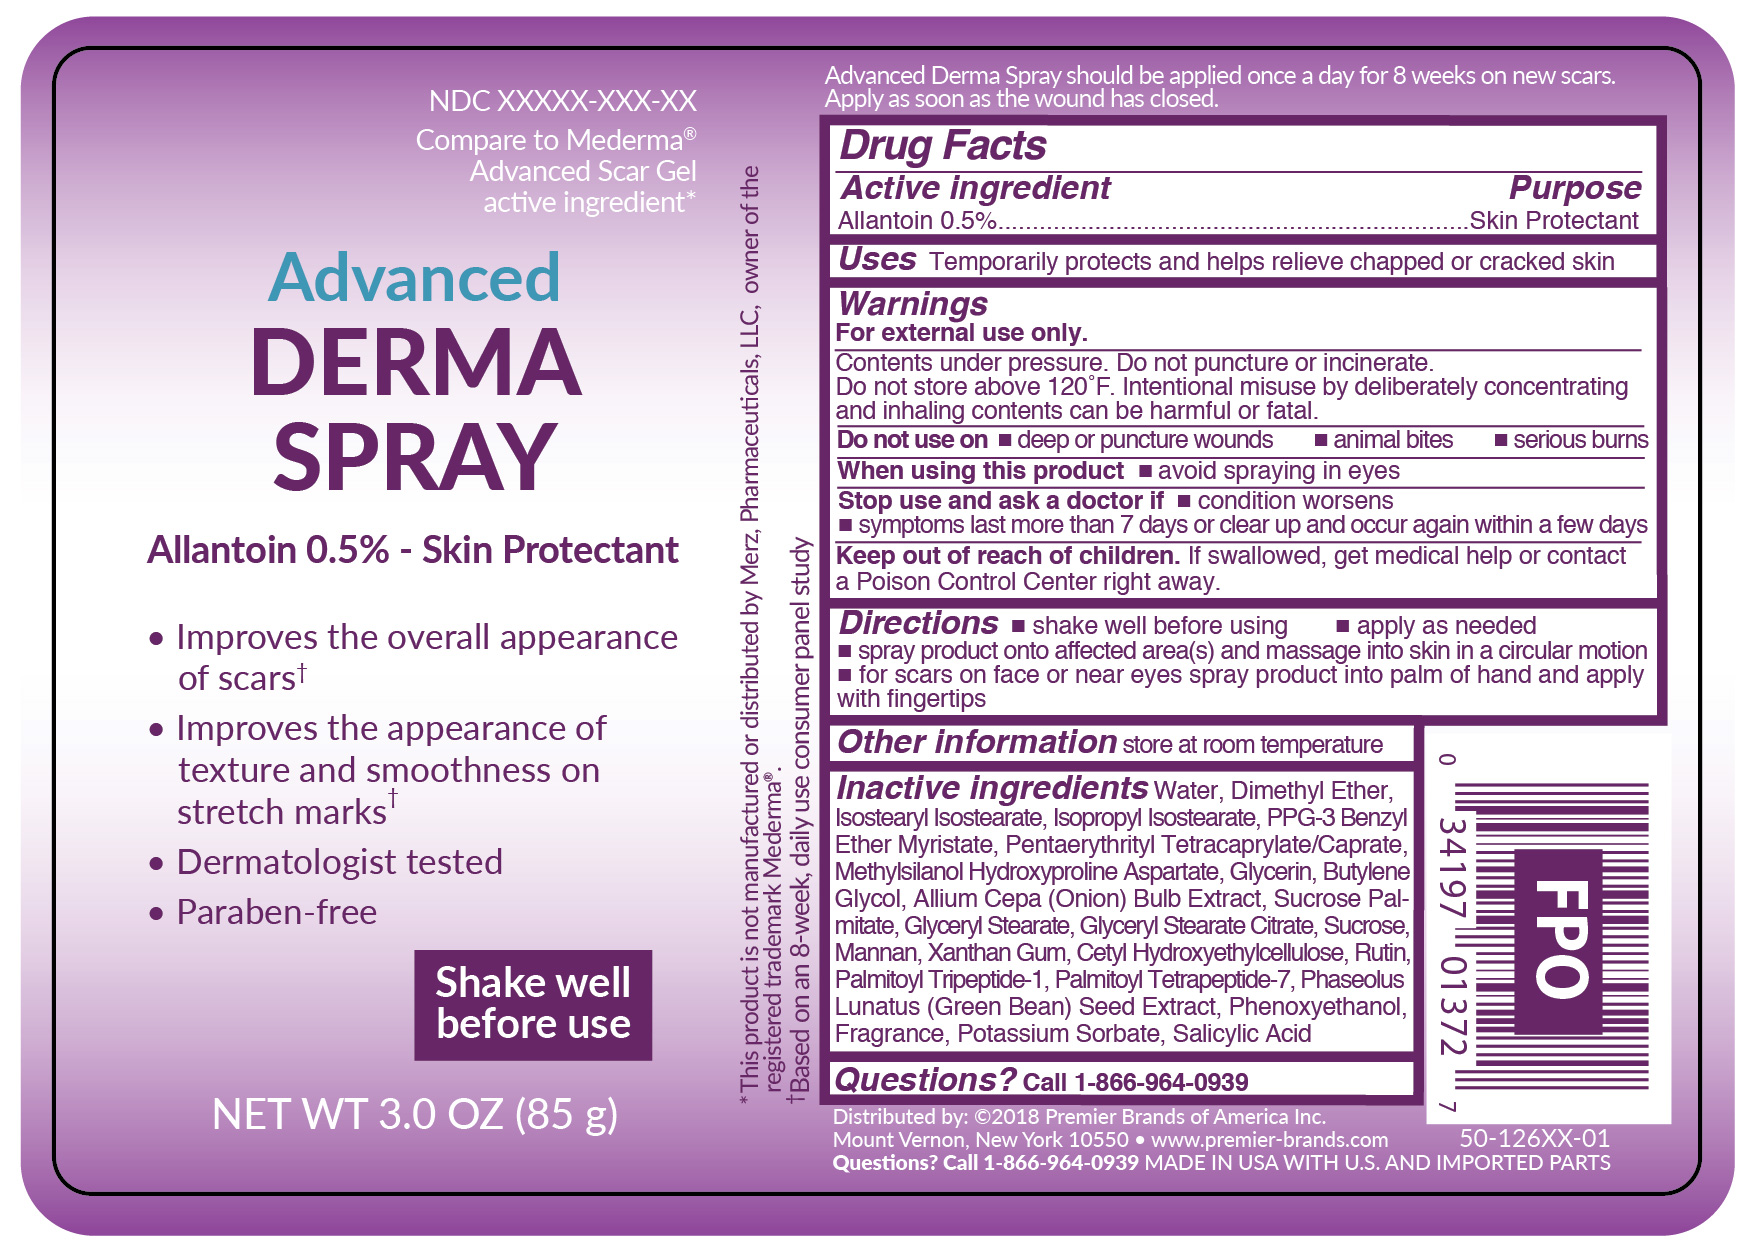 Generic_Advanced Derma Spray_50-126XX-01.jpg